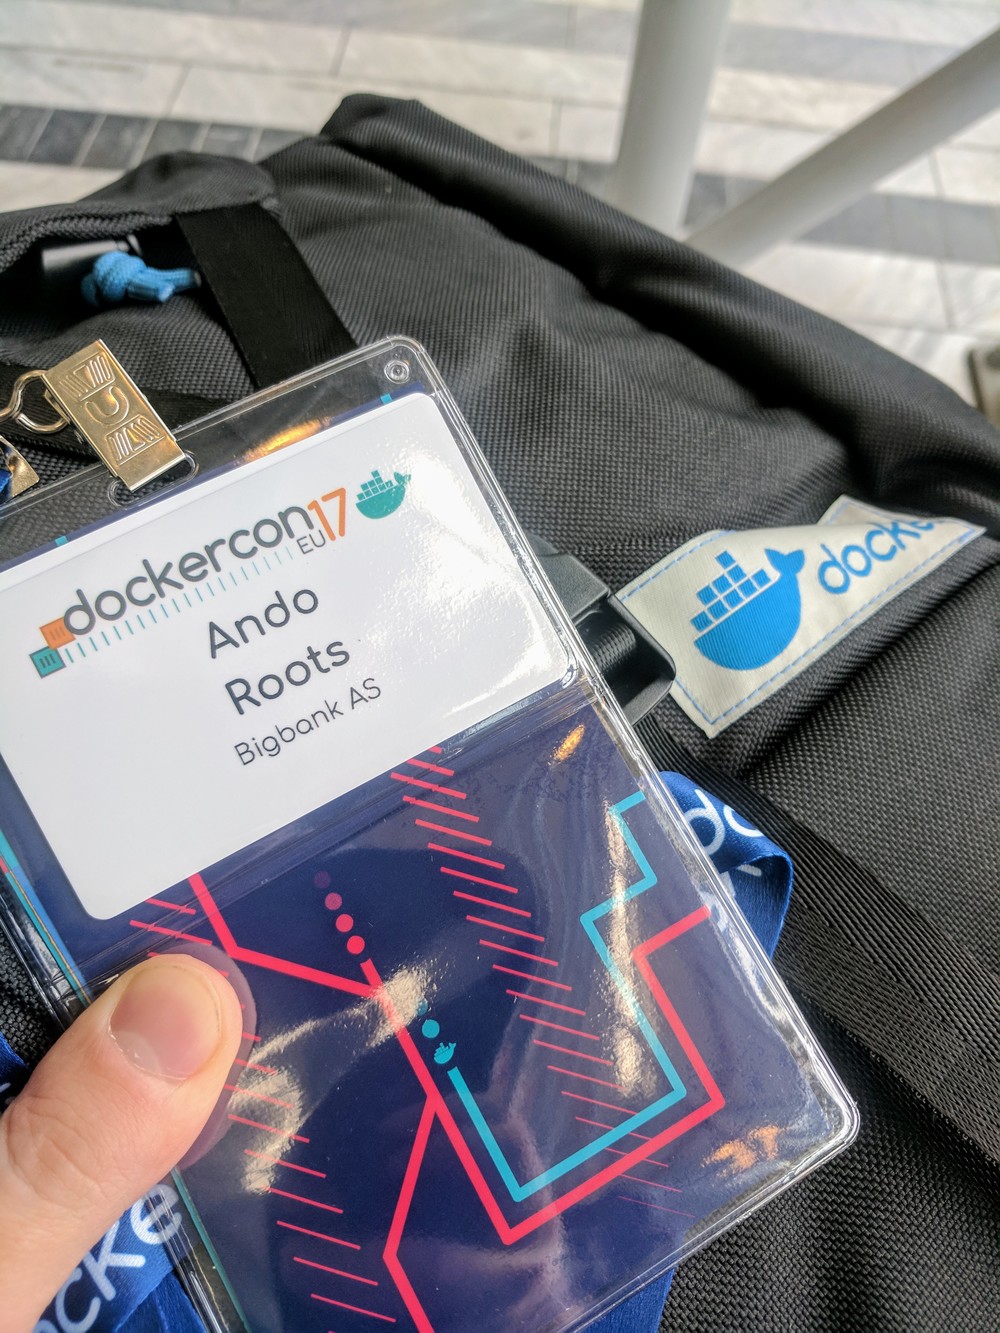 DockerCon badge